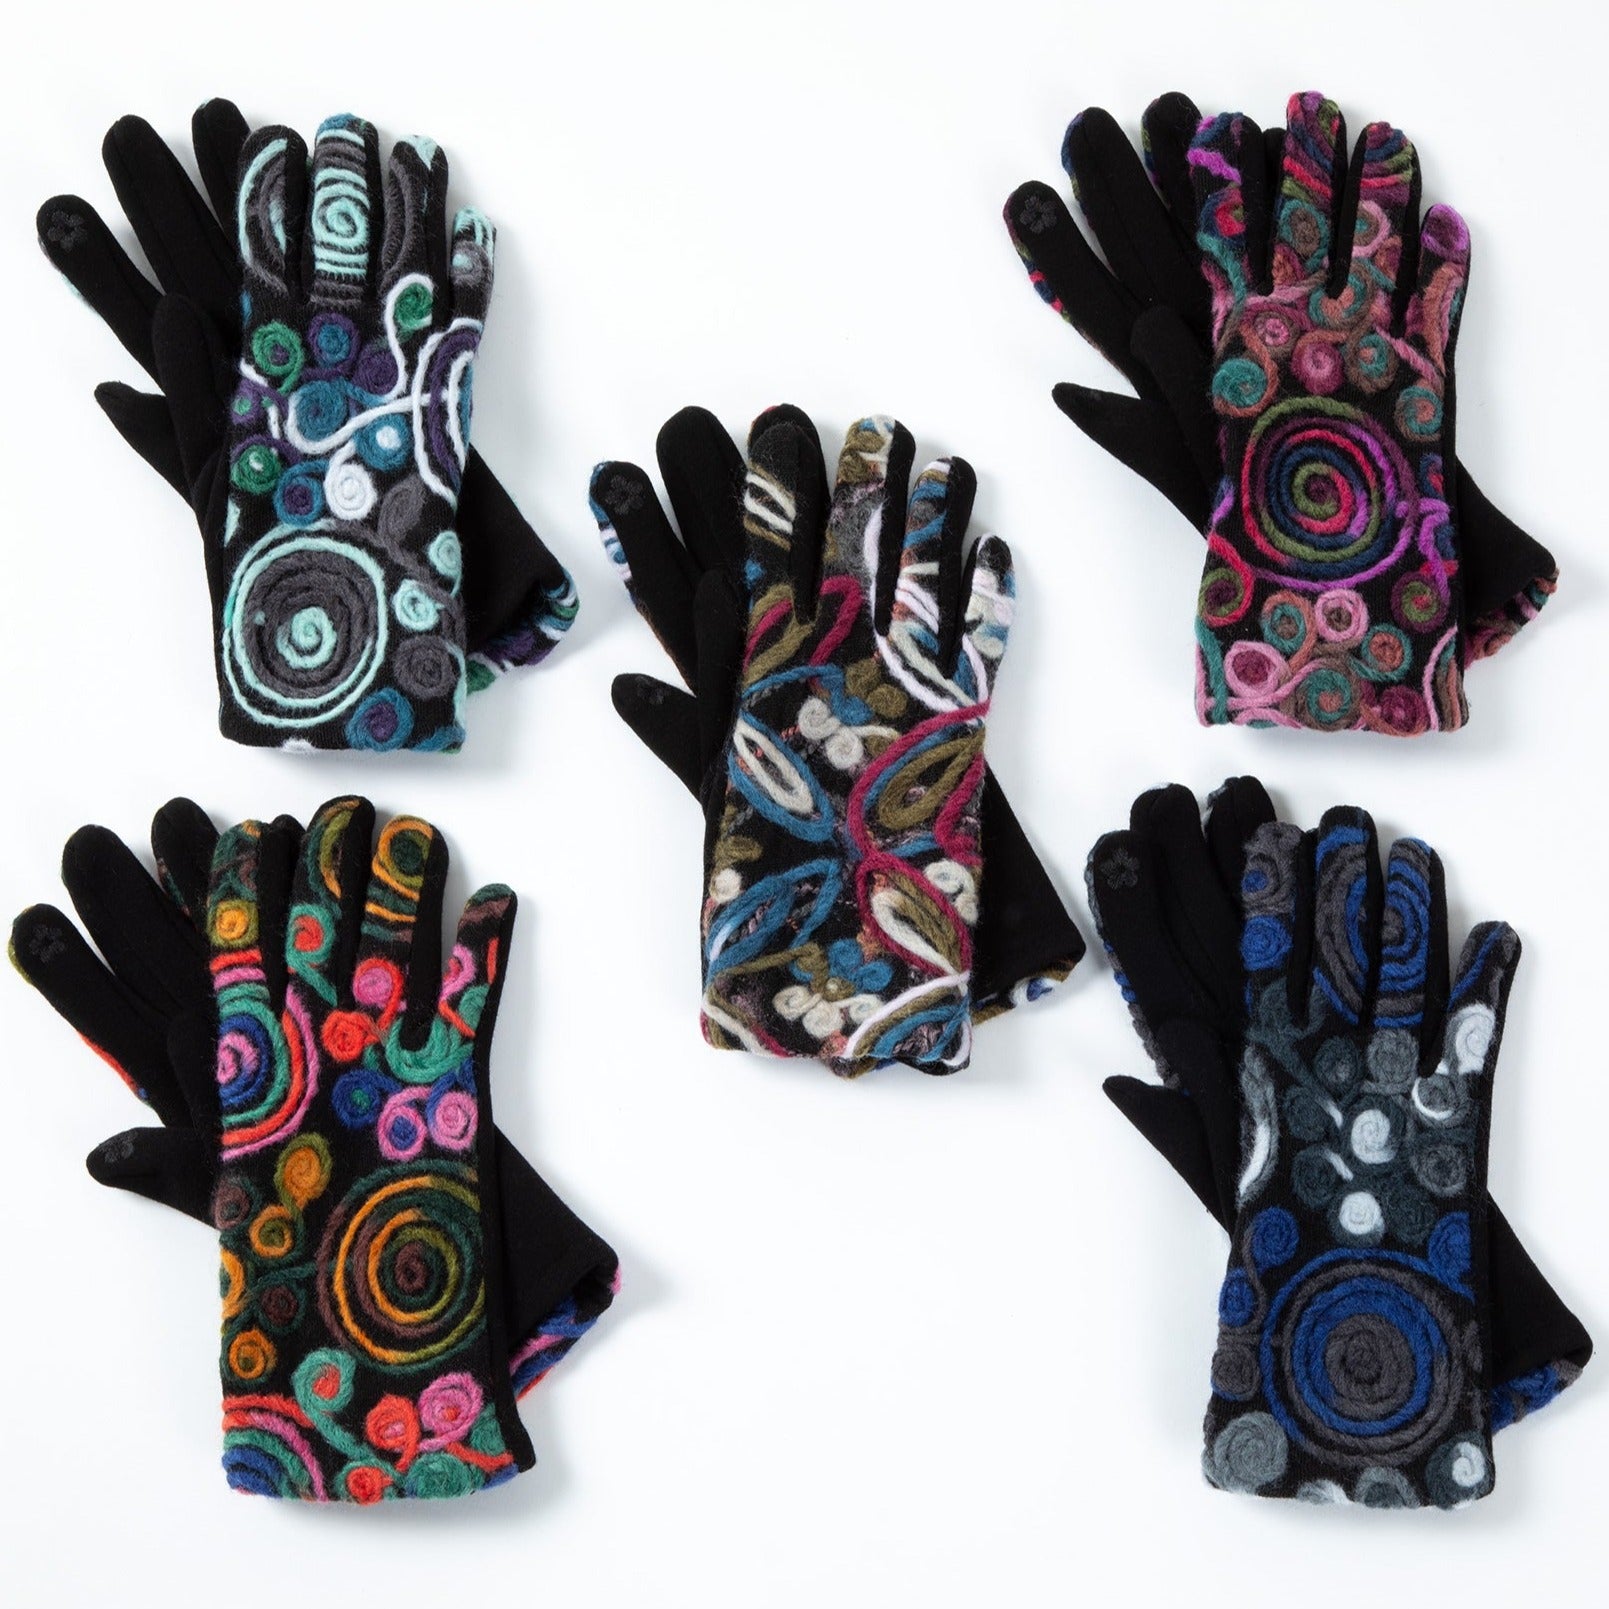 Threaded Swirls Touch Screen Gloves - Blue/Gray/Black